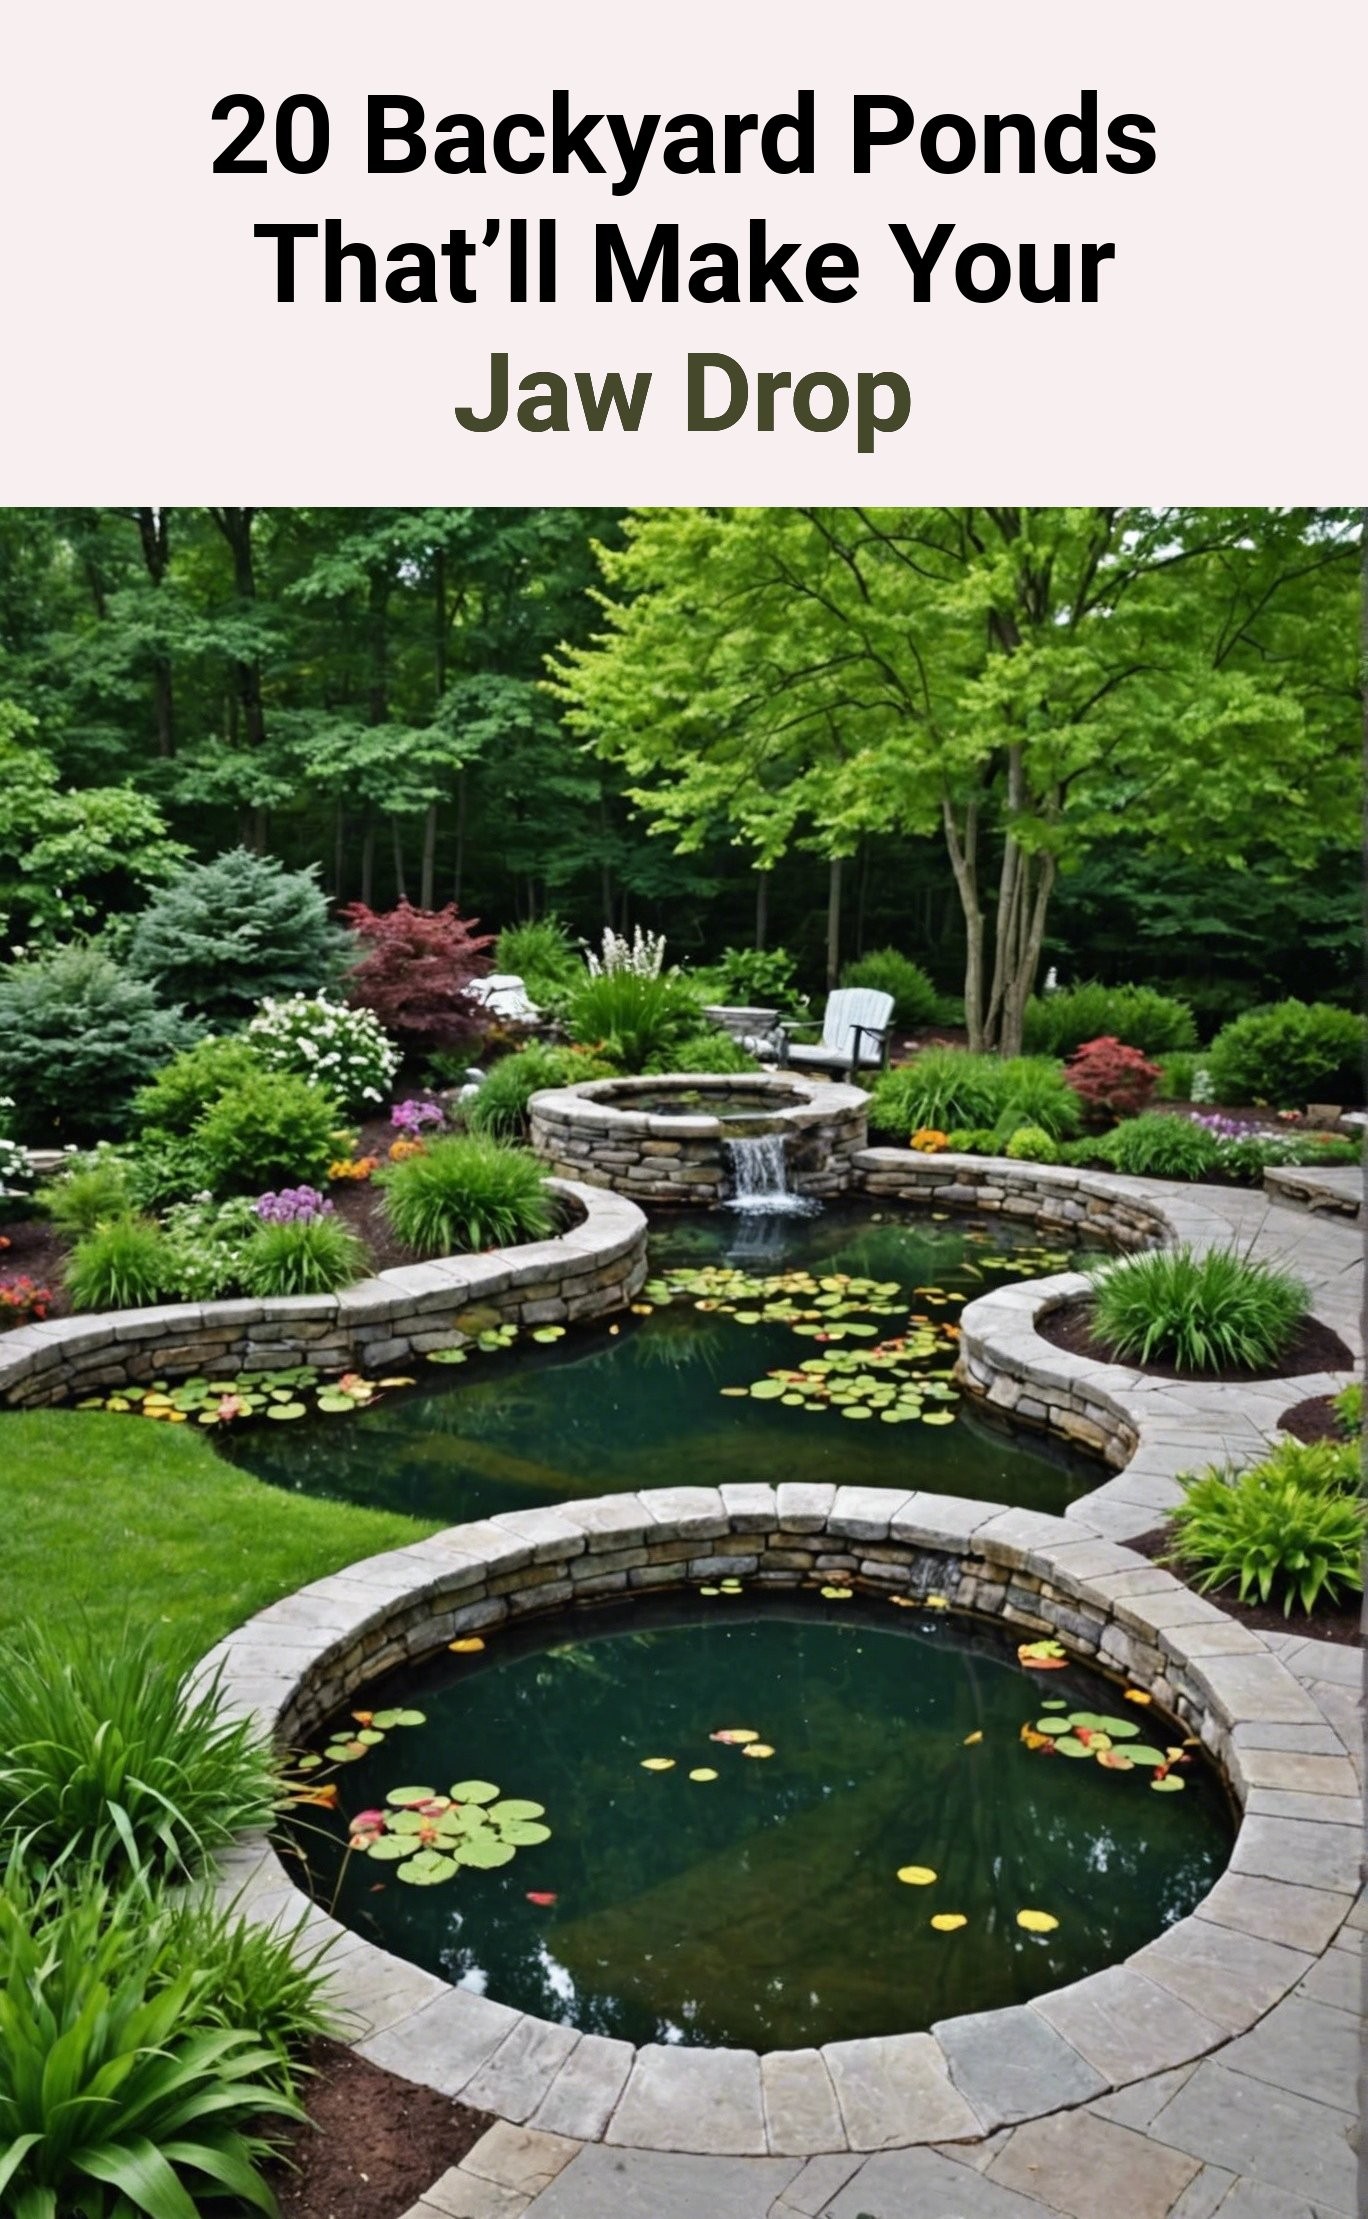 20 Backyard Ponds That’ll Make Your Jaw Drop